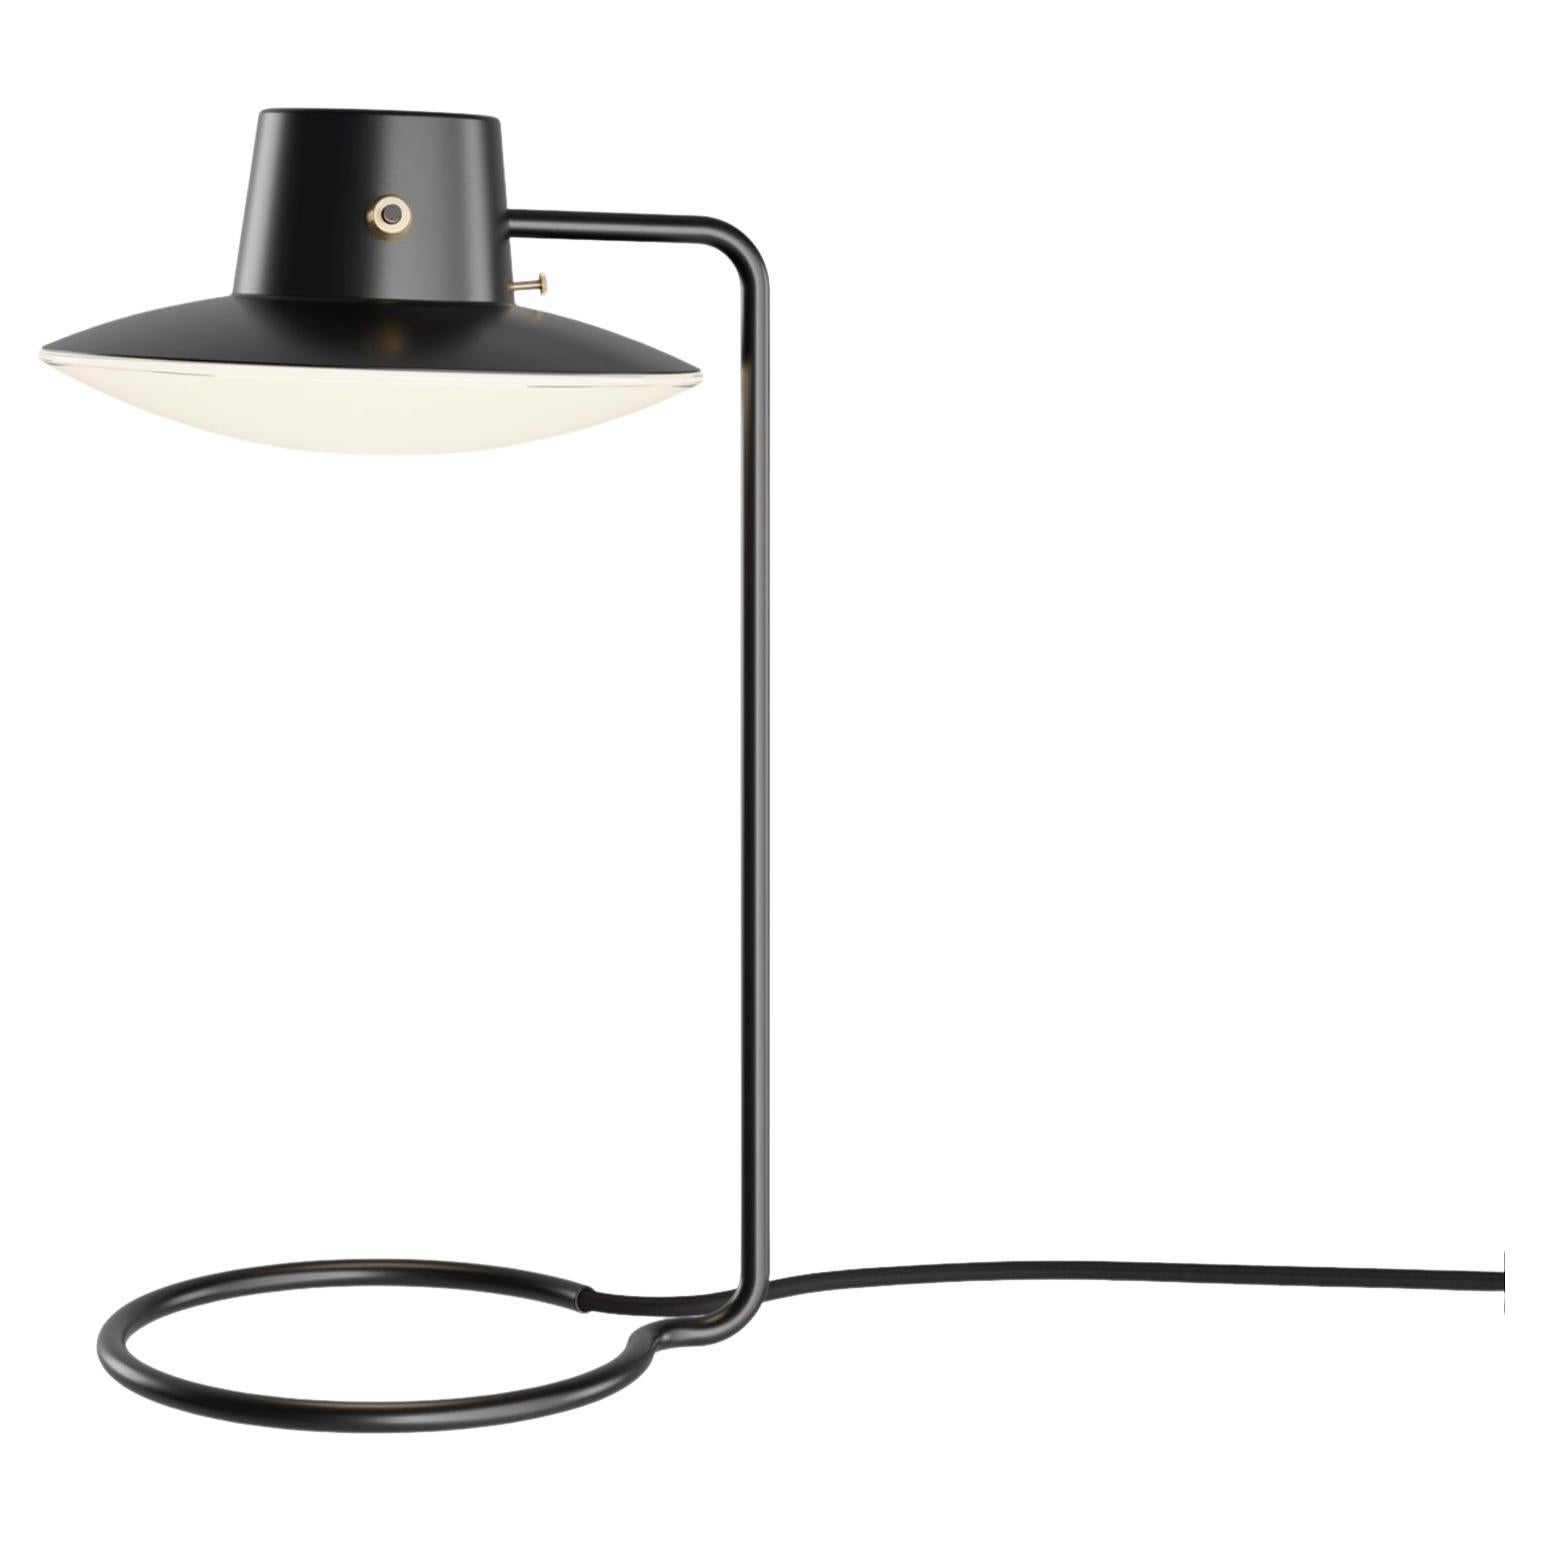 Arne Jacobsen AJ Oxford Table Lamp for Louis Poulsen, 1963 For Sale